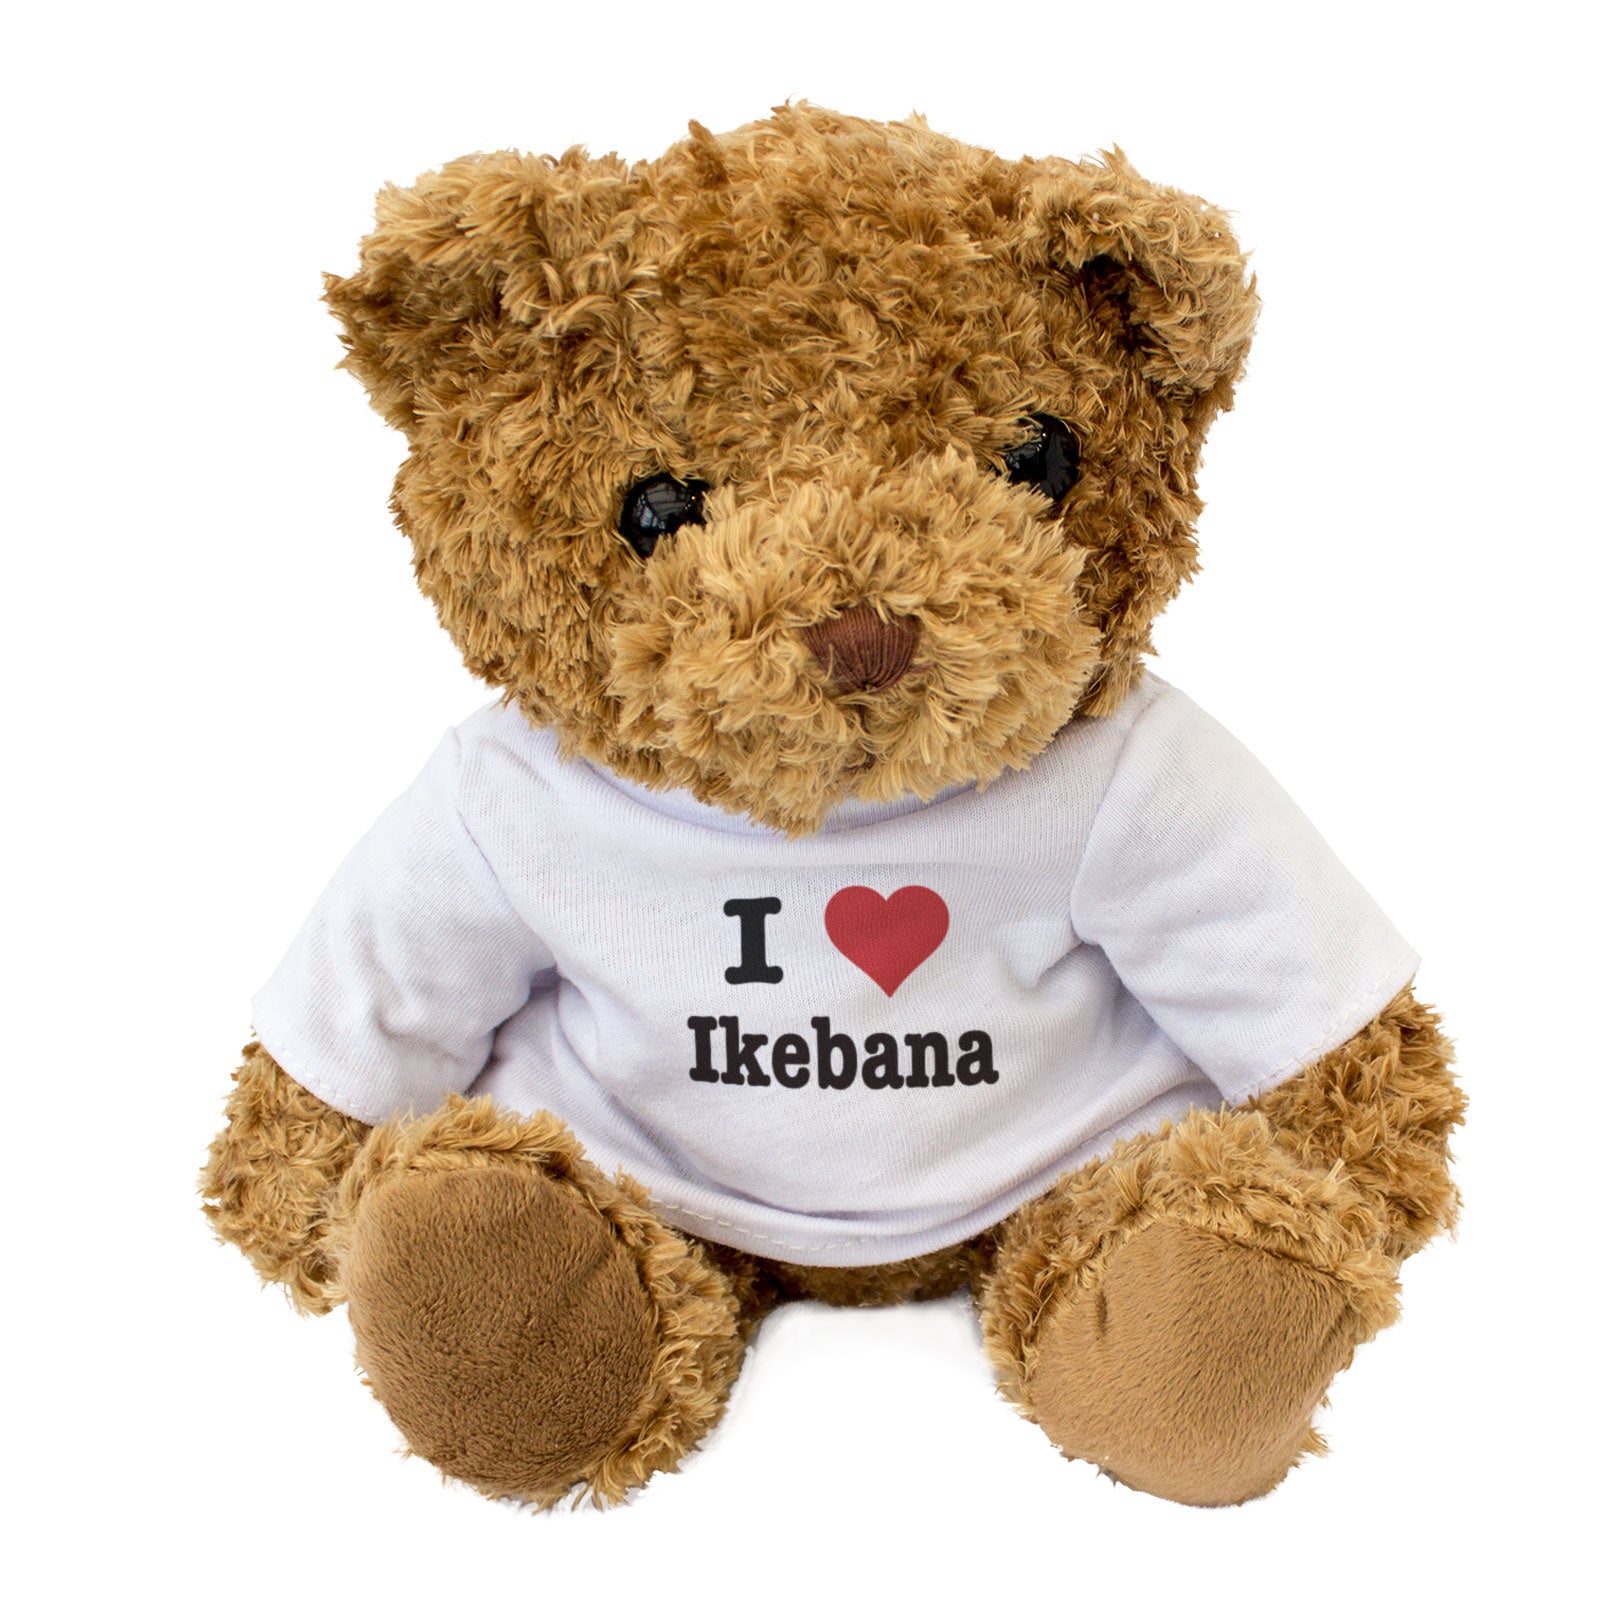 I Love Ikebana - Teddy Bear